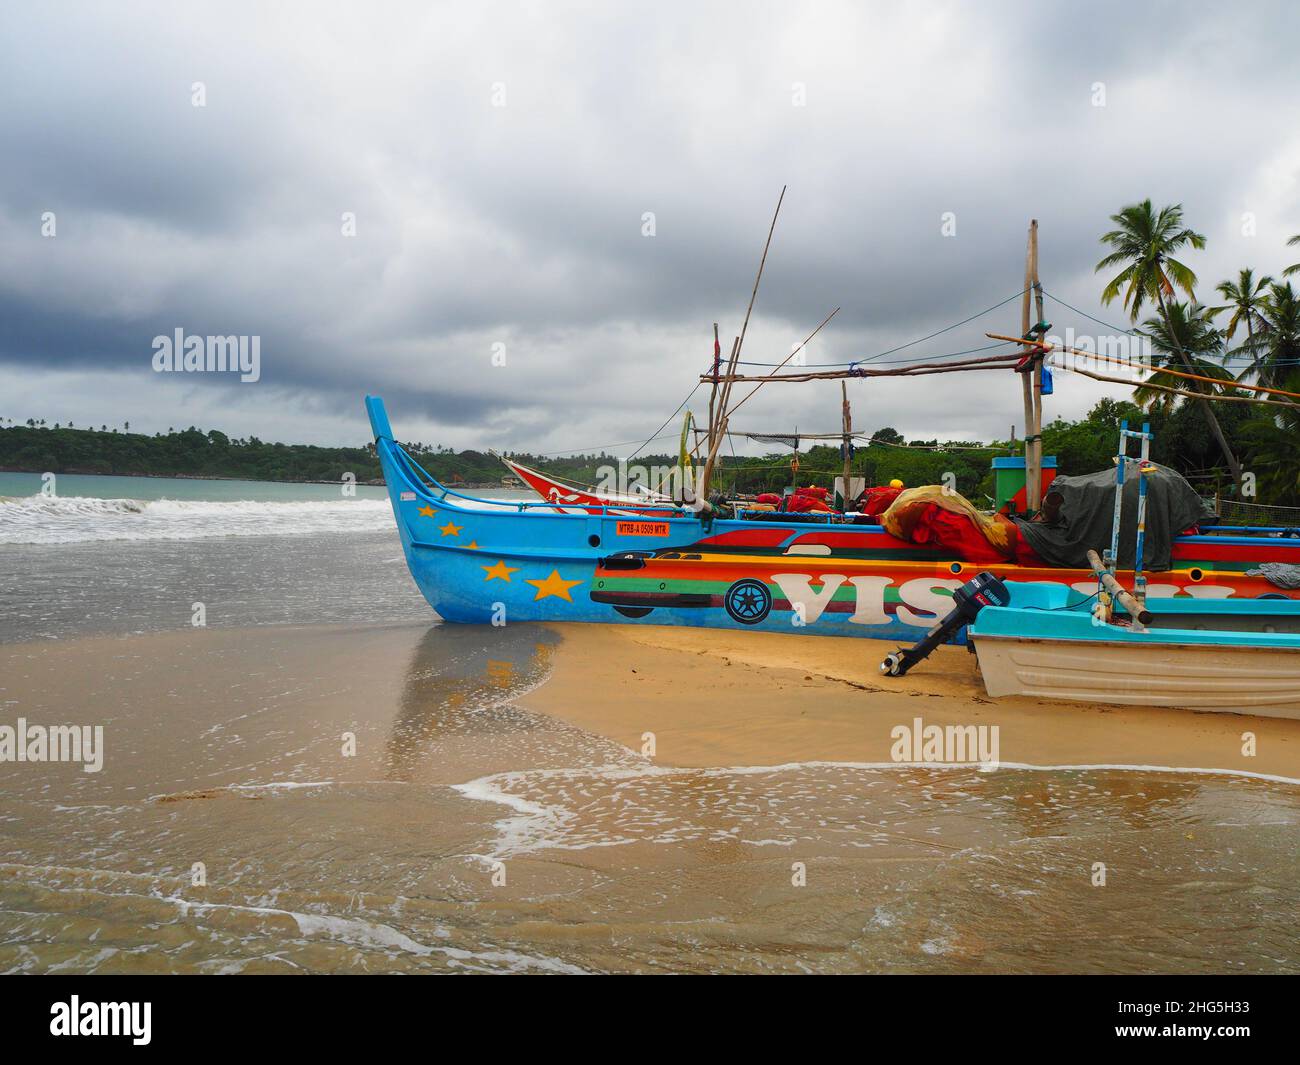 Bunte einheimische Fischerboote, Strand & Ozean Südostasien #Asien #aroundtheworld #SouthEastAsia #SriLanka #Hinterland #Authentic #fernweh #Slowtravel Stockfoto